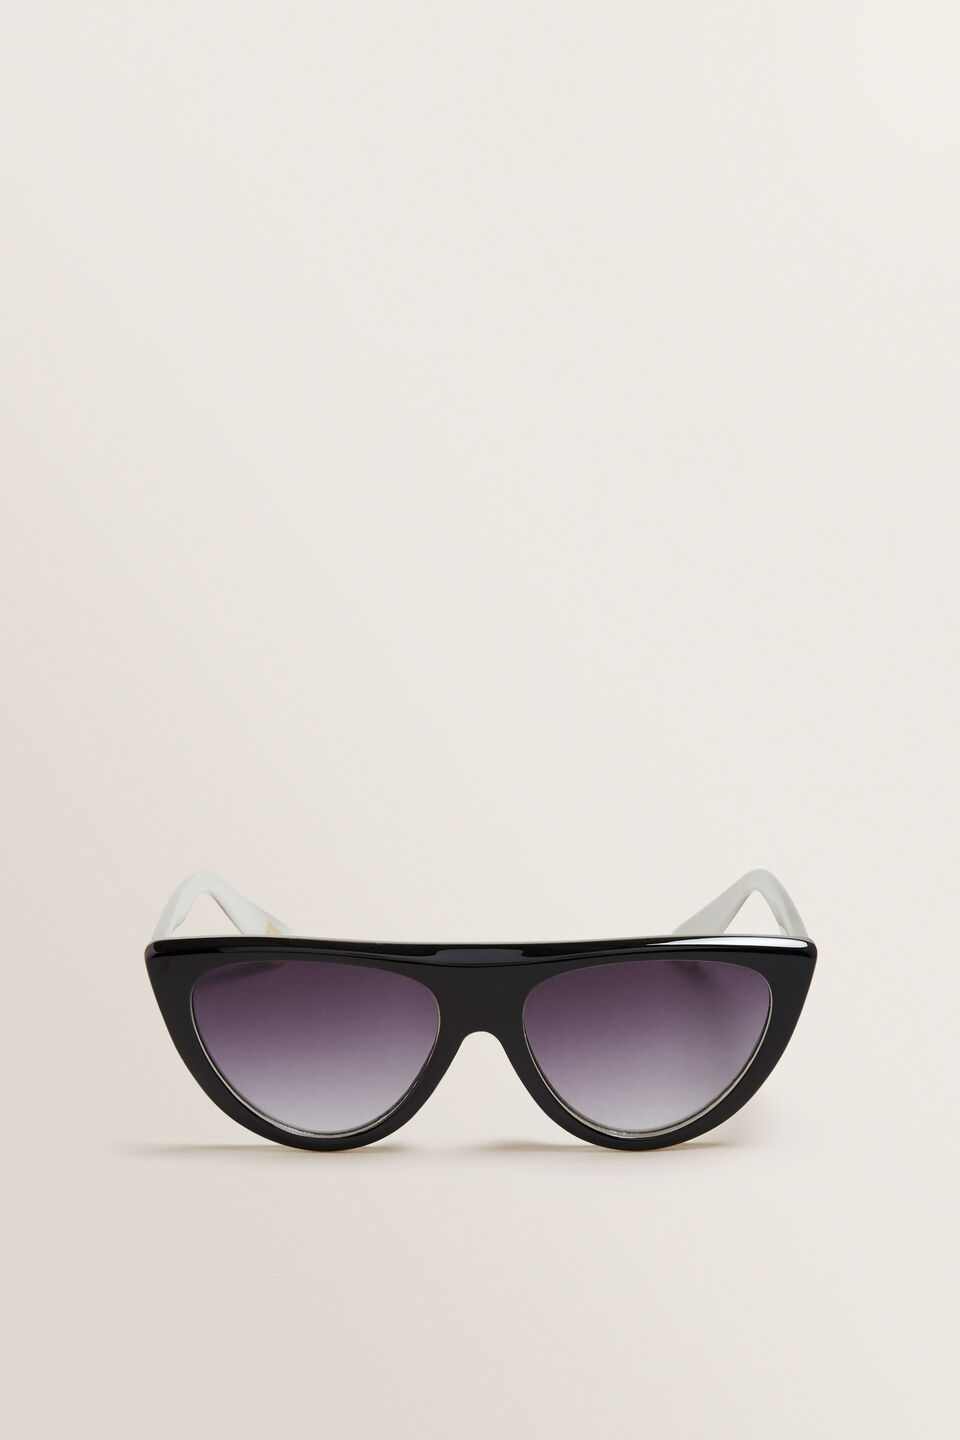 Zara Flat Top Sunglasses  